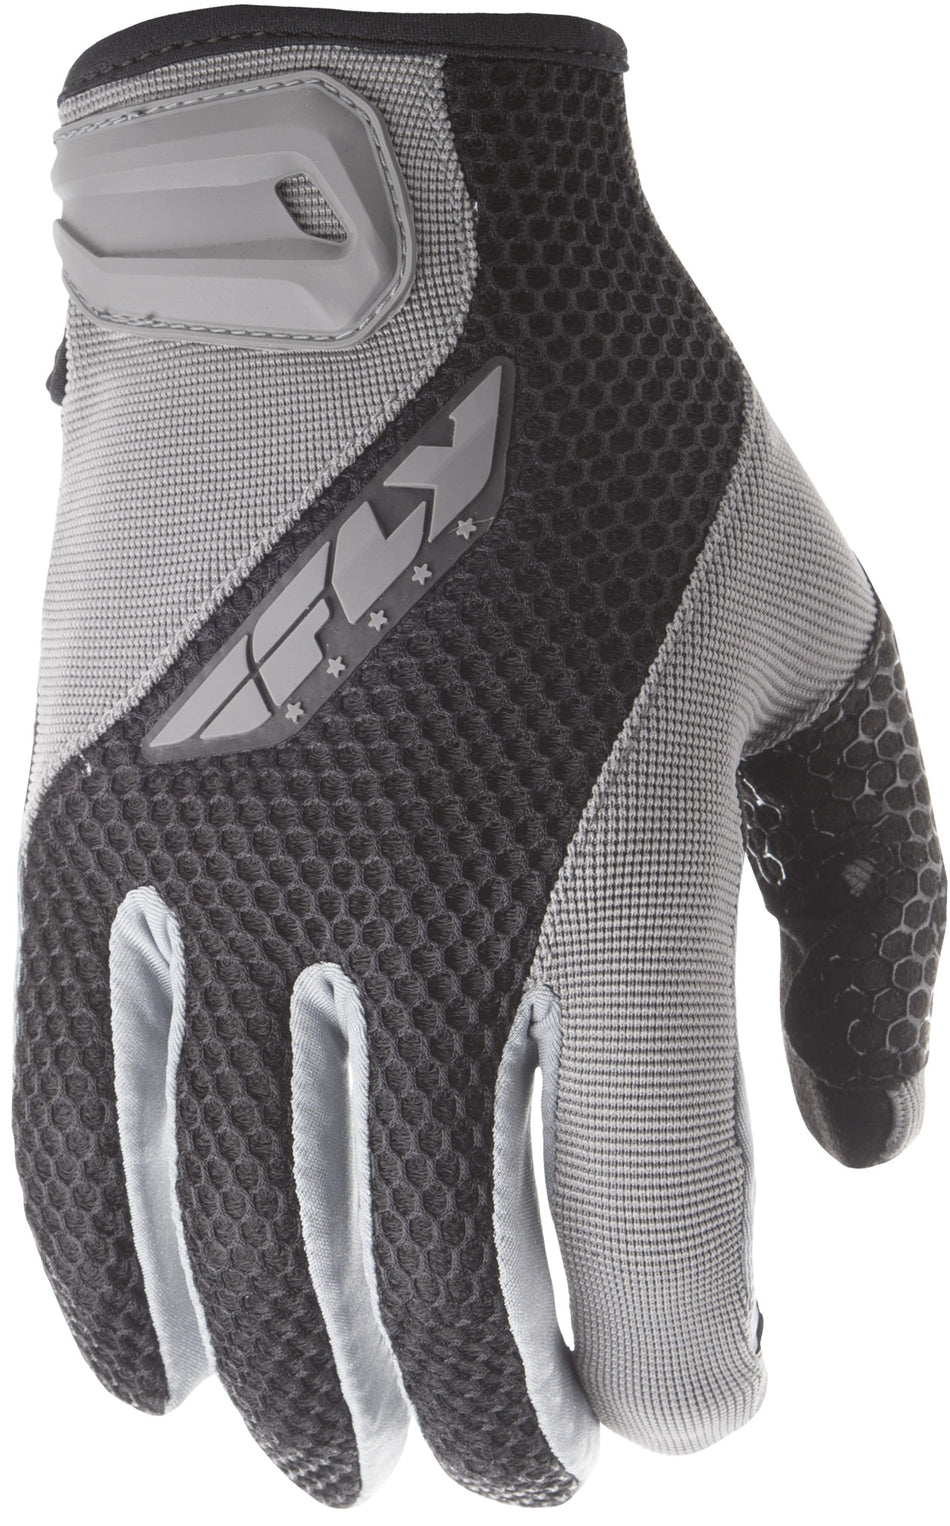 FLY RACING Coolpro Gloves Gunmetal/Black 2x #5884 476-4023~6